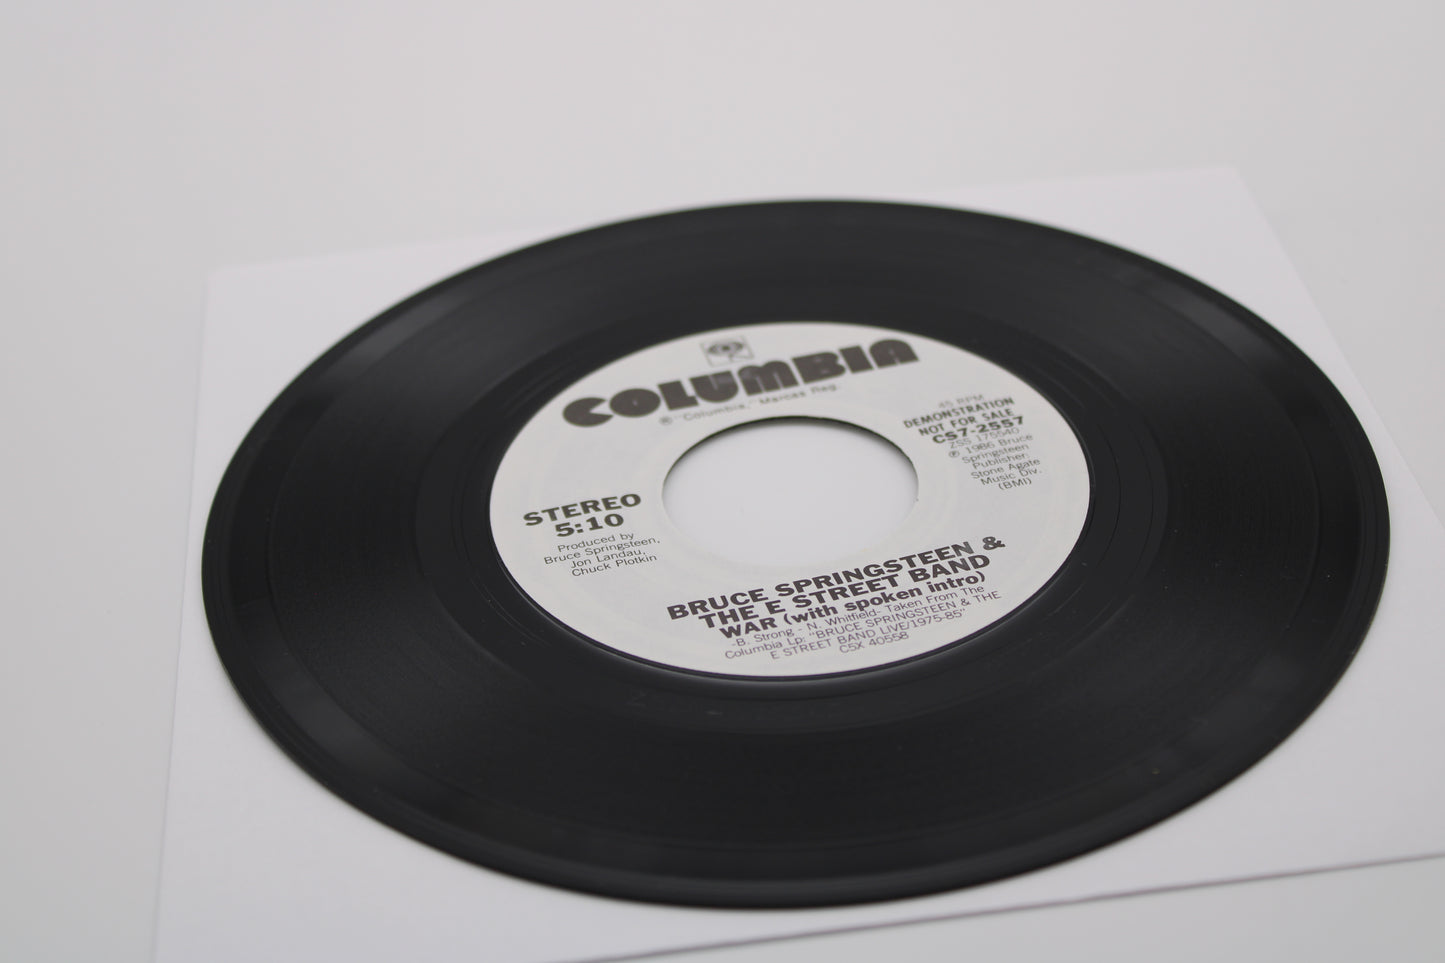 Bruce Springsteen 45 Record WAR Demonstration Not For Sale Vinyl Release